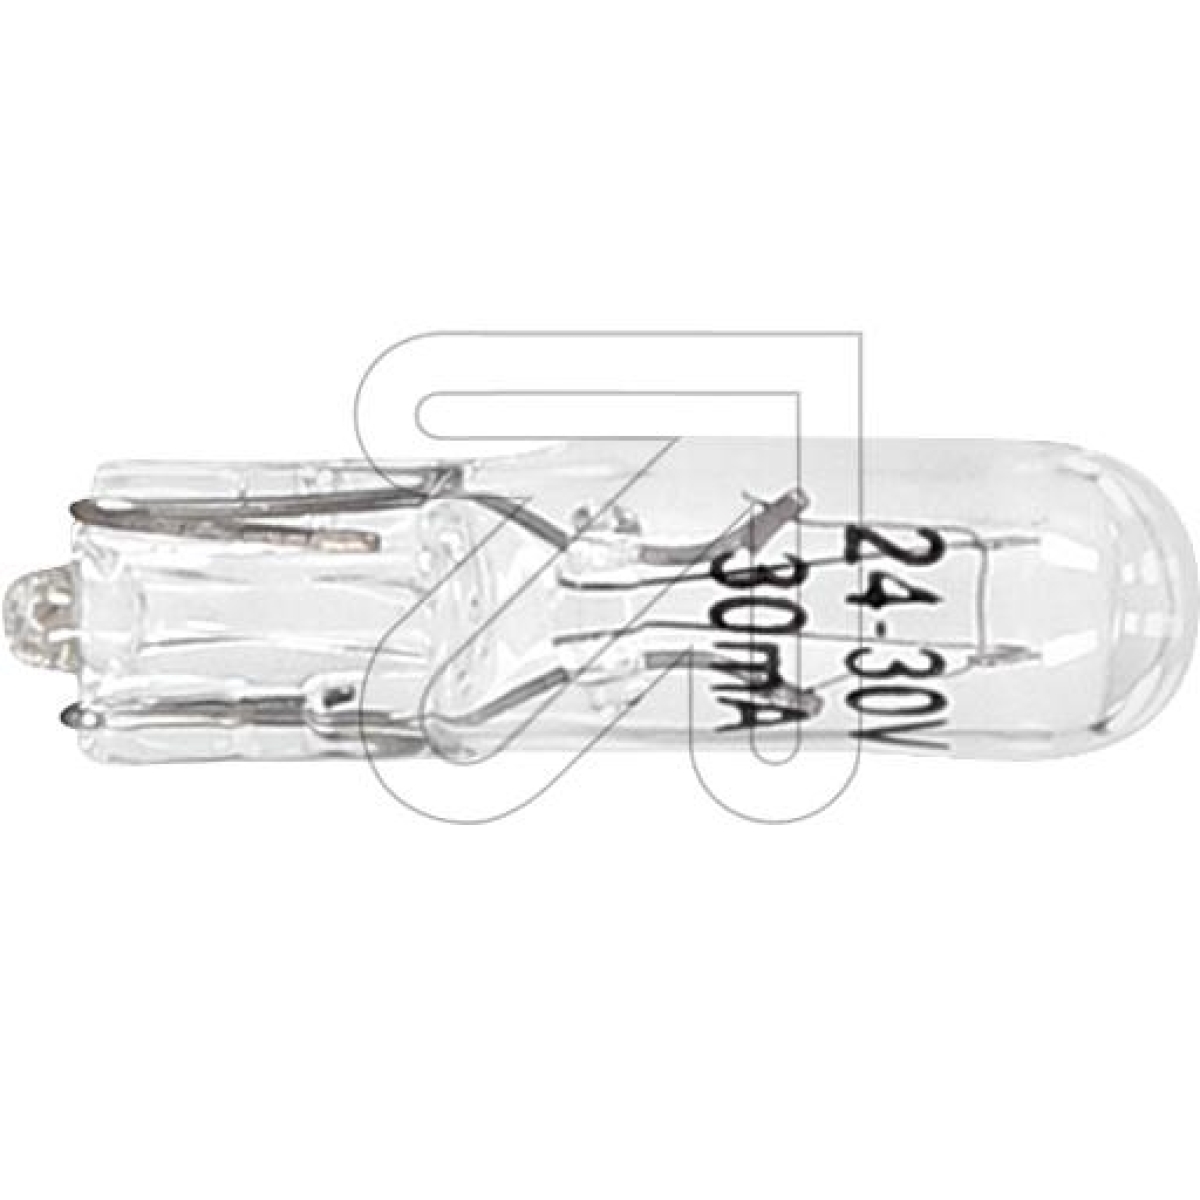 BarthelmeGlass base lamp 24V 0.03A-Price for 10 pcs.